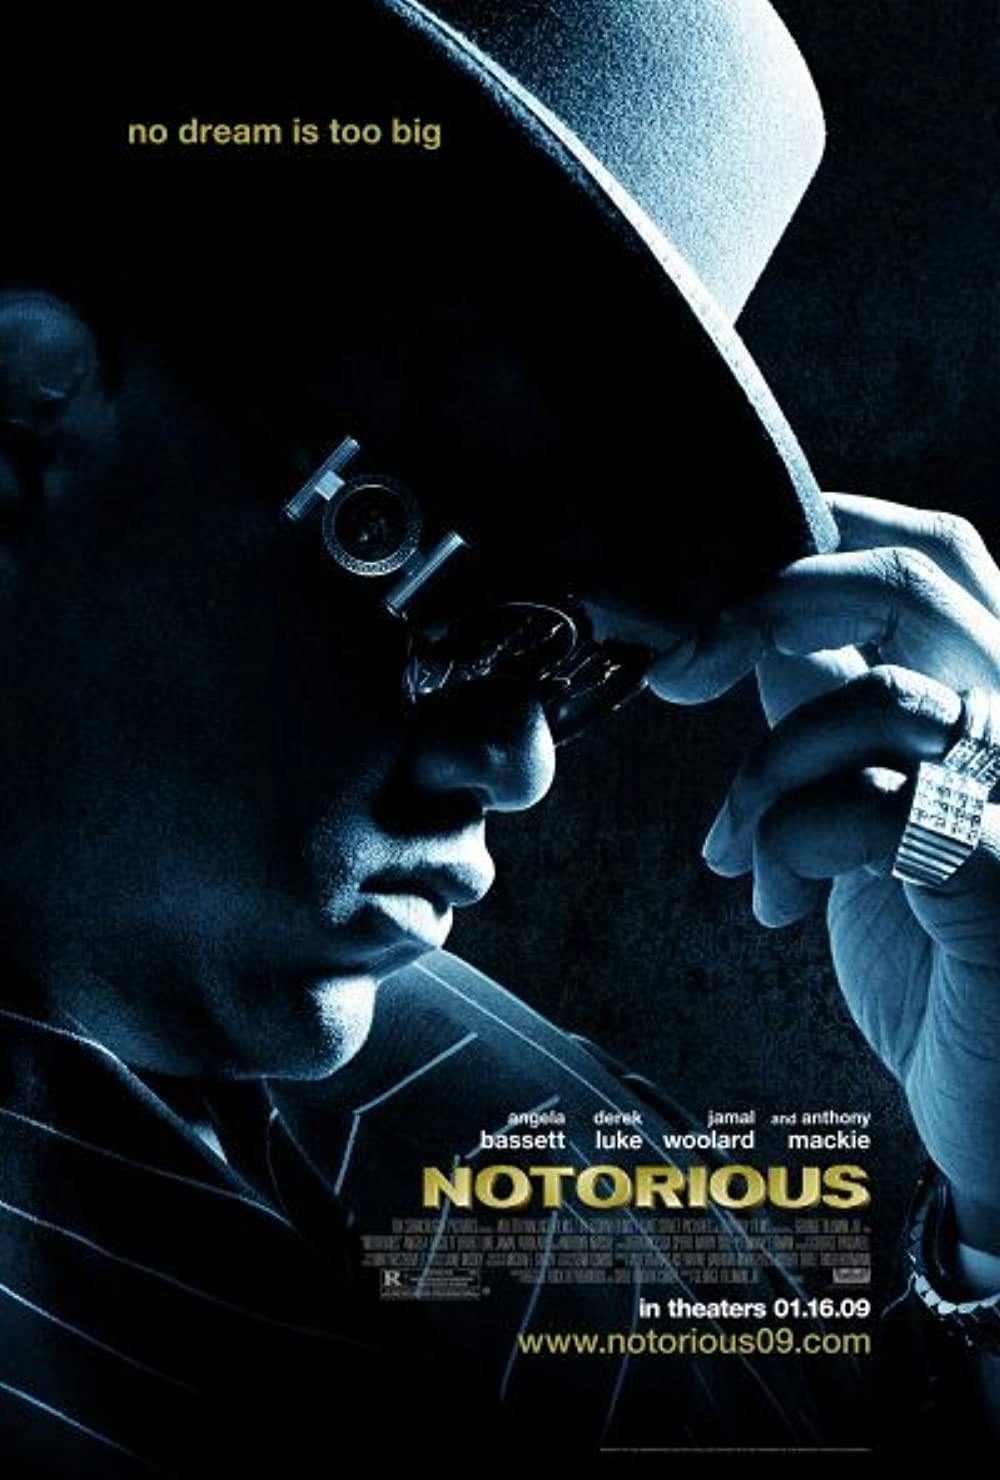 DAR Classic Hip Hop: Notorious B.I.G's Life After Death